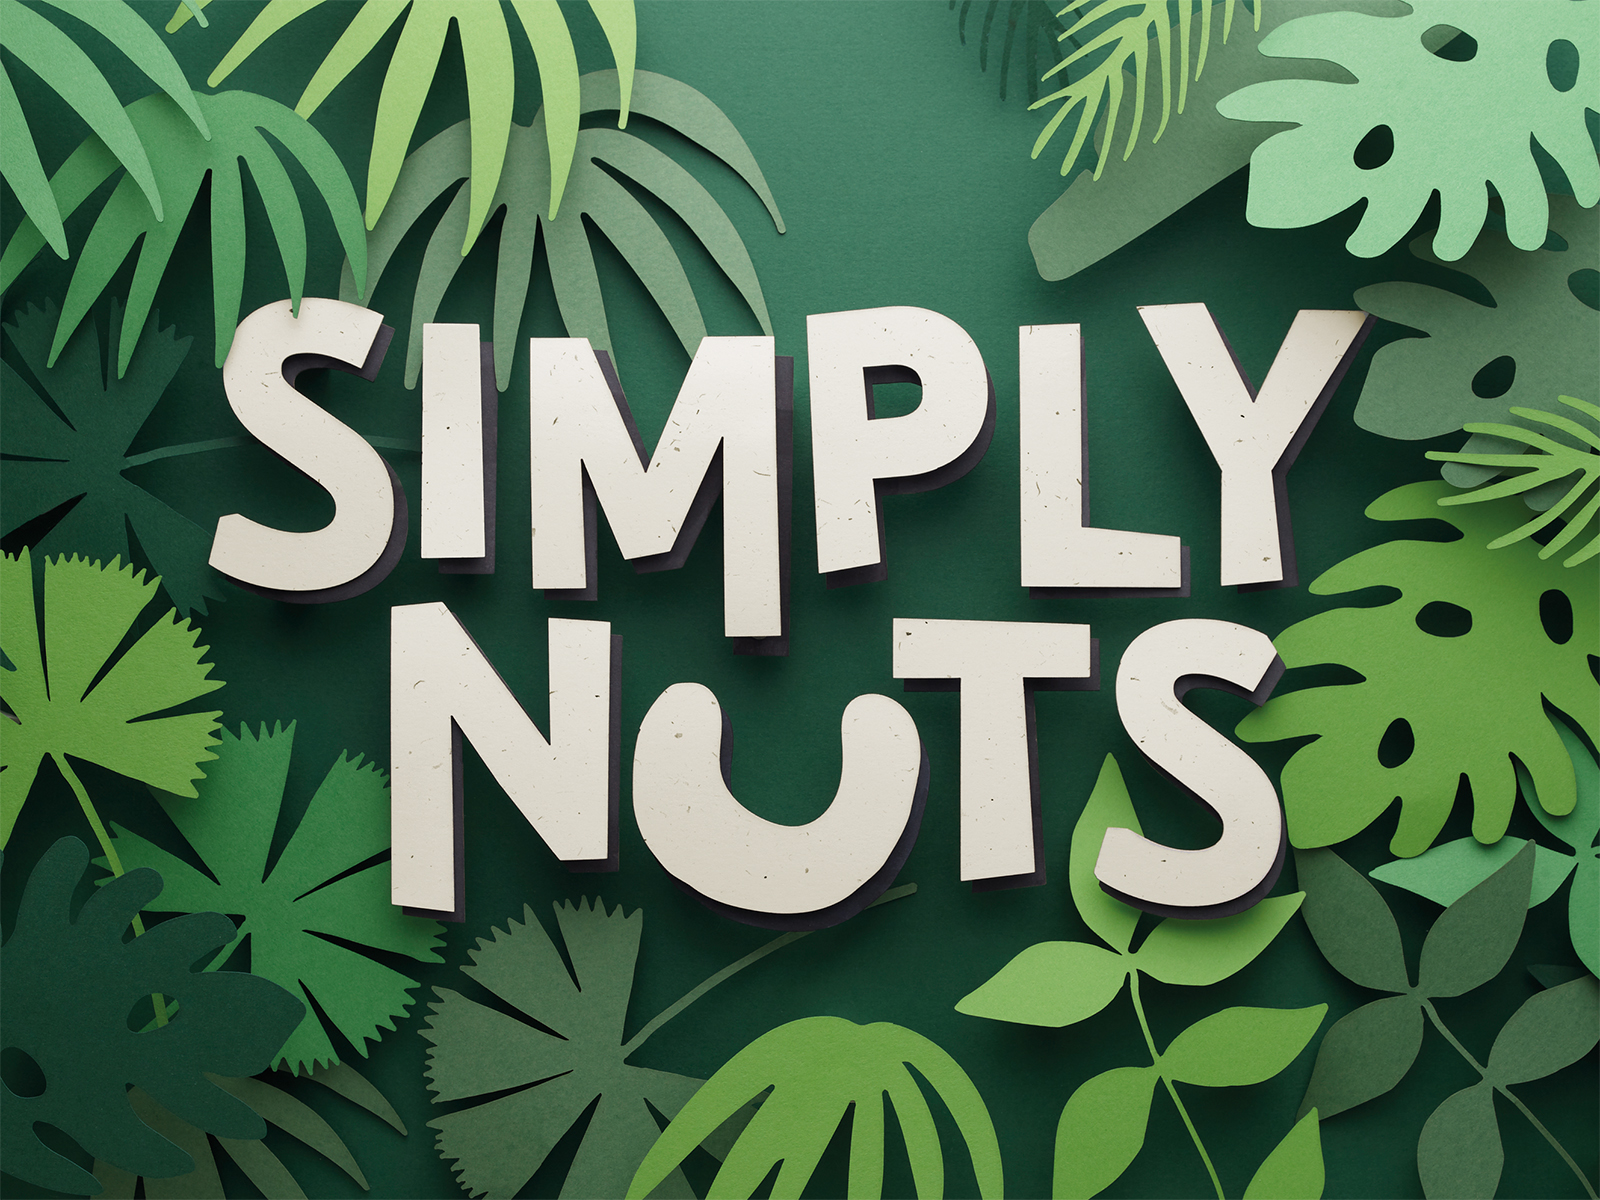 Simply Nuts Packaging Design By Studio Oeding